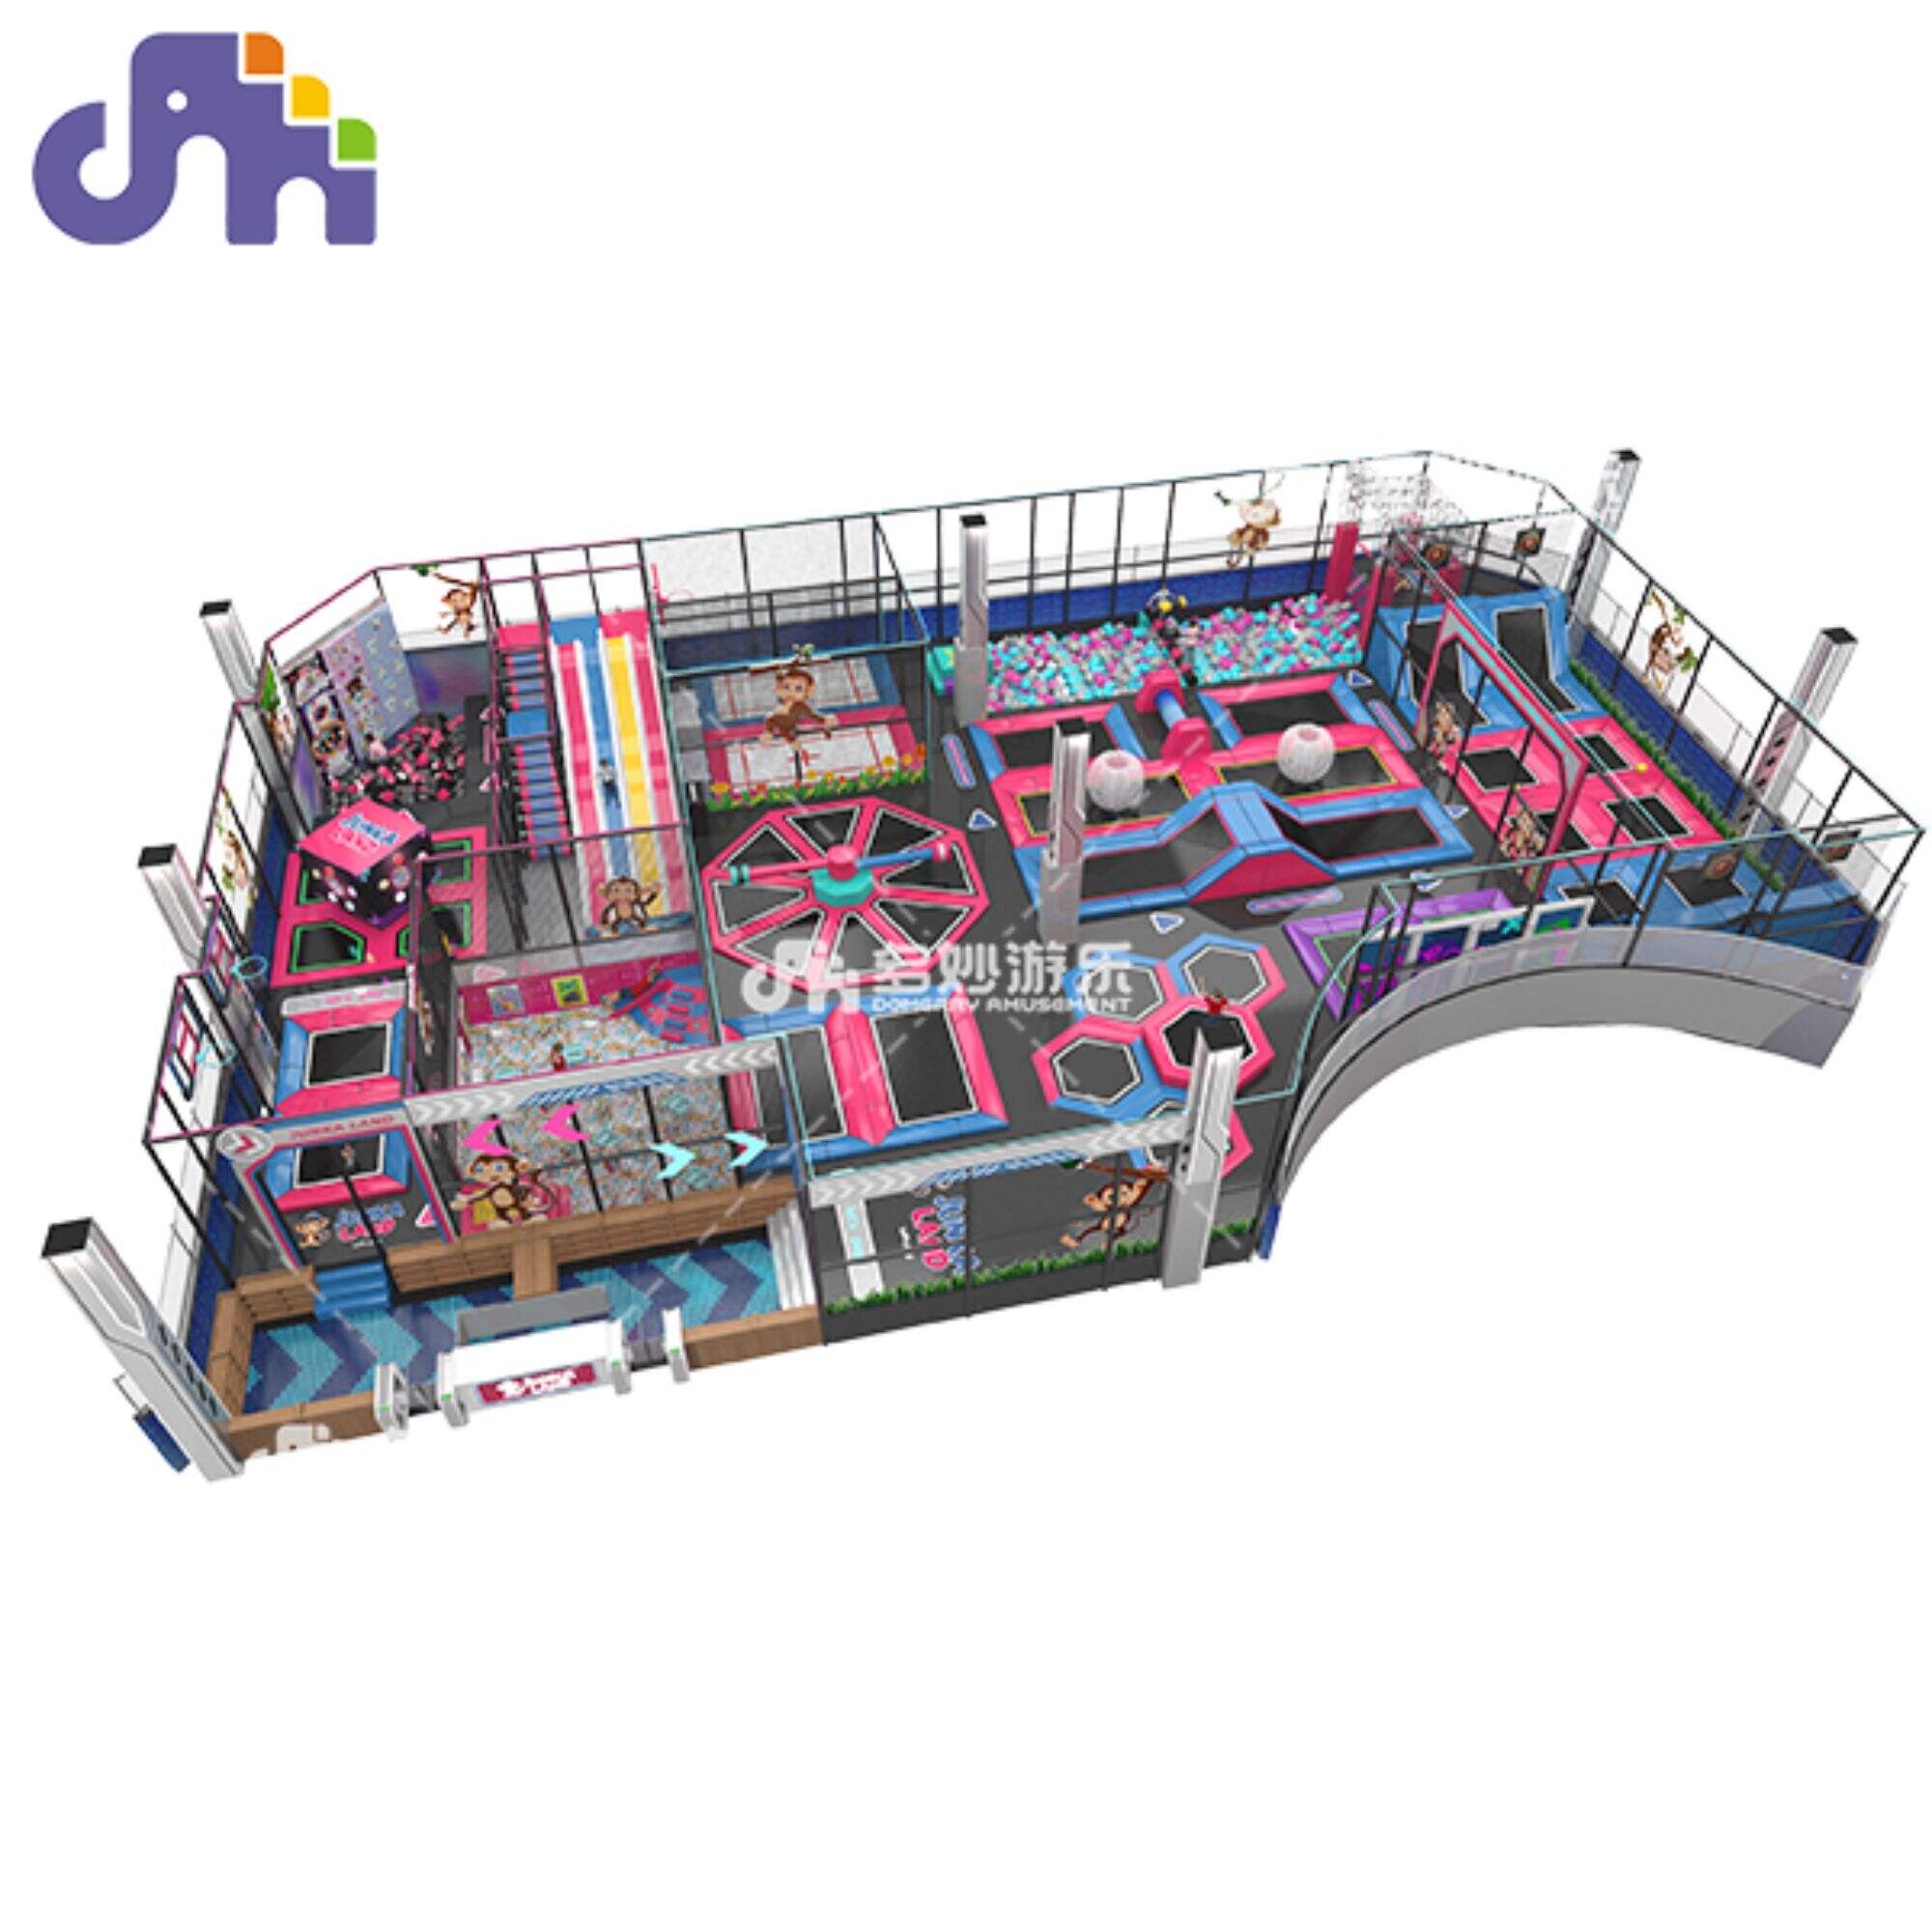 Parque de trampolim infantil fabricado por trampolim de salto adulto disponível para shoppings